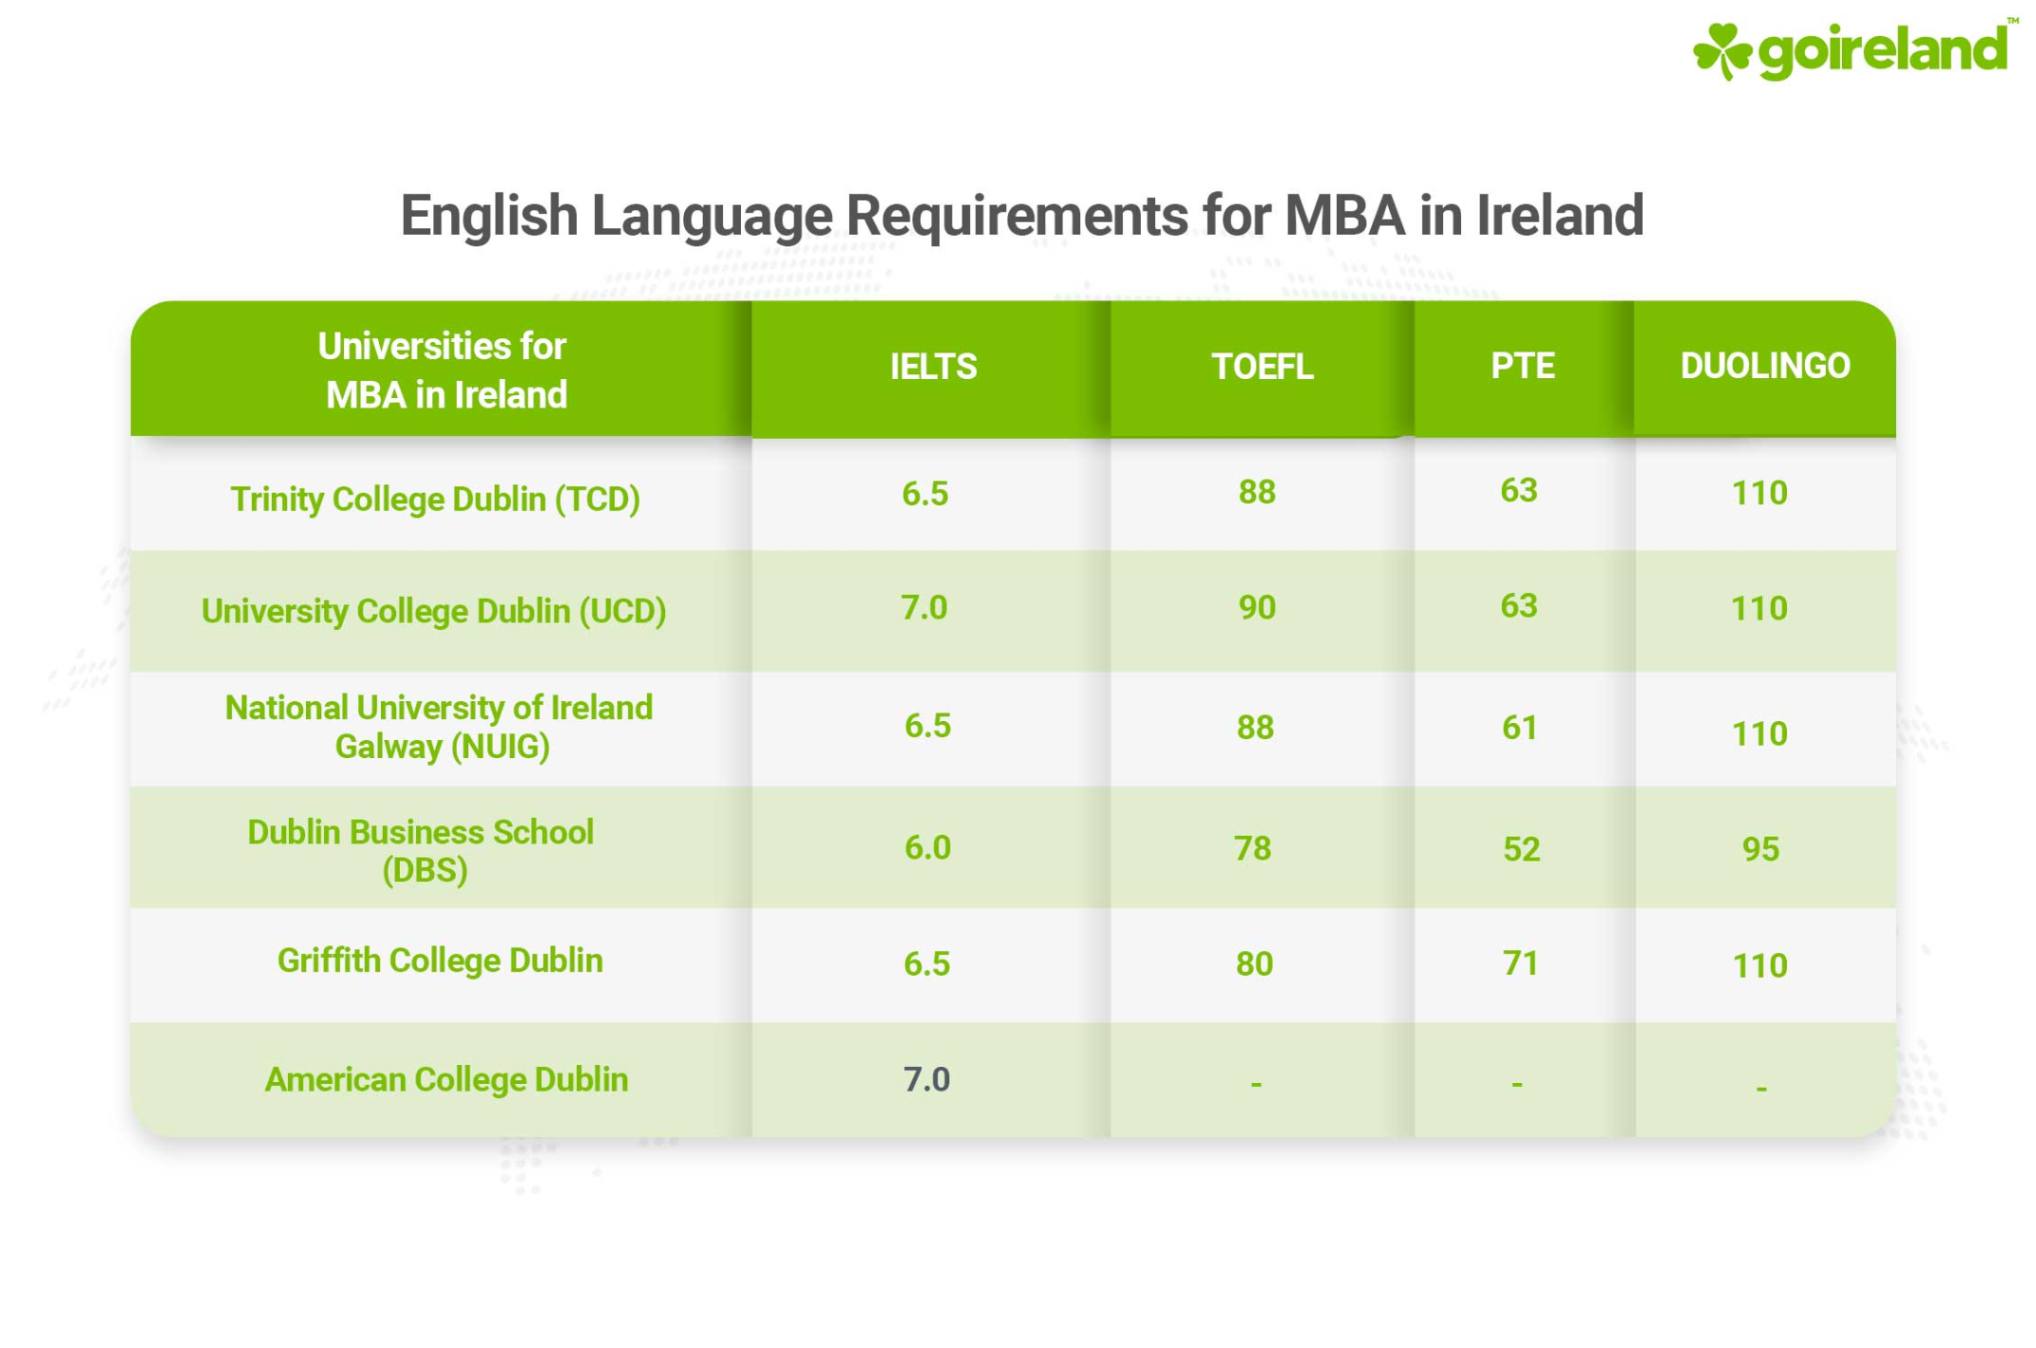 MBA English Language Requirements